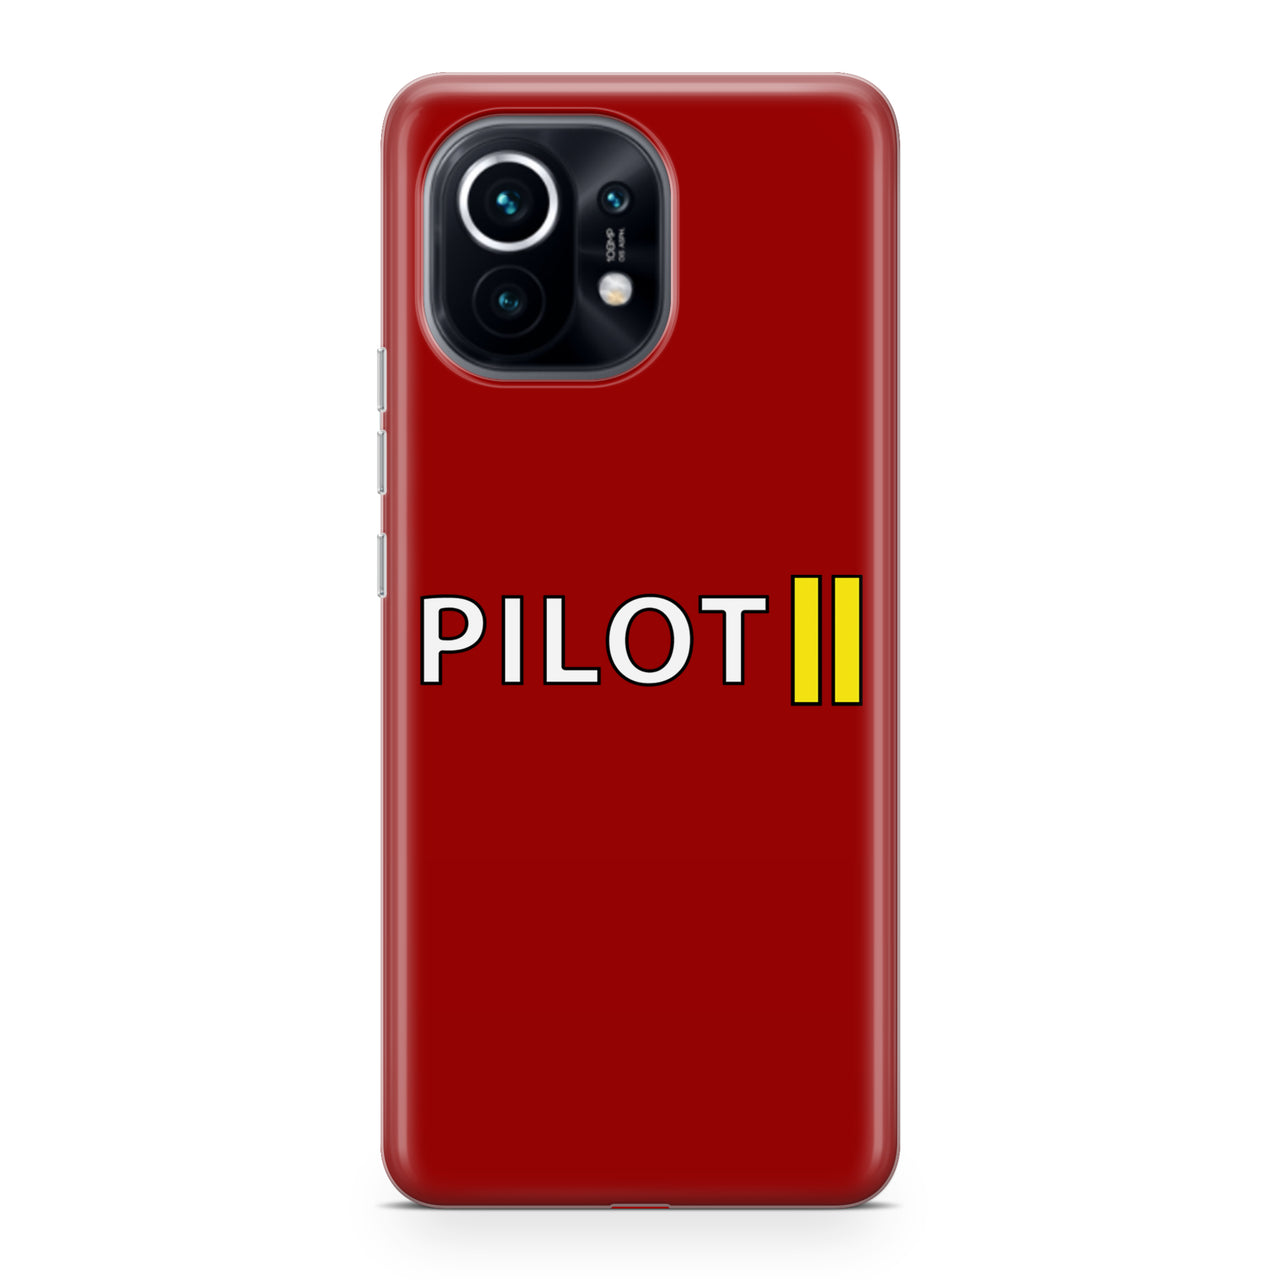 Pilot & Stripes (2 Lines) Designed Xiaomi Cases